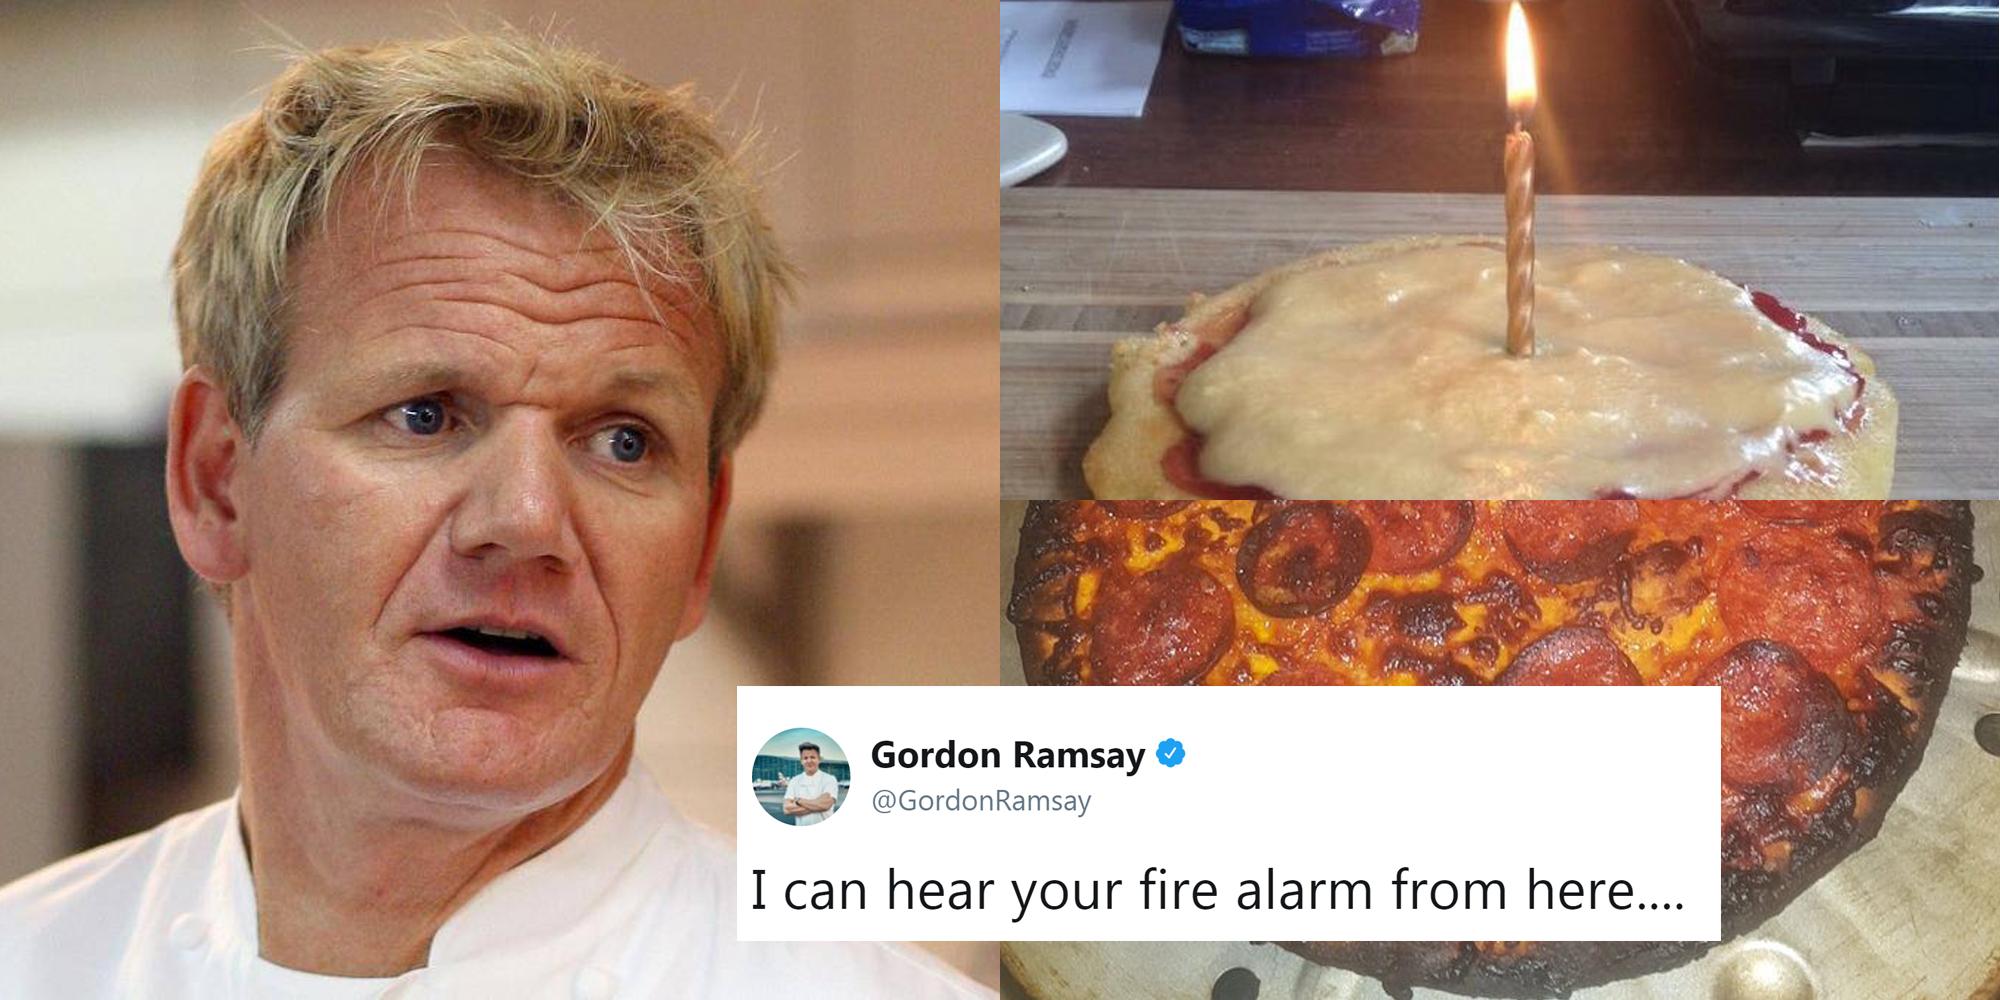 Gordon Ramsay Some Good Food Meme. 